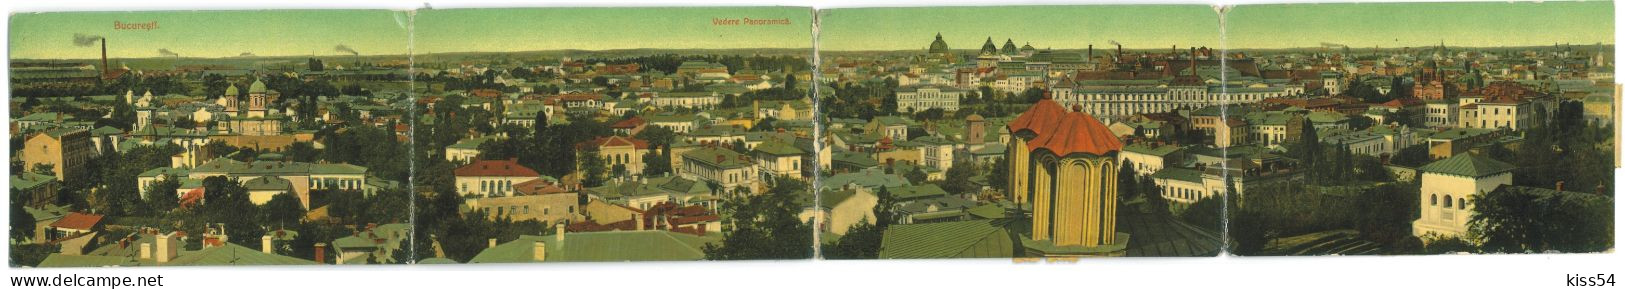 RO 97 - 23657 BUCURESTI, Panorama, Romania - Old 4 Postcards - Used - 1910 - Romania